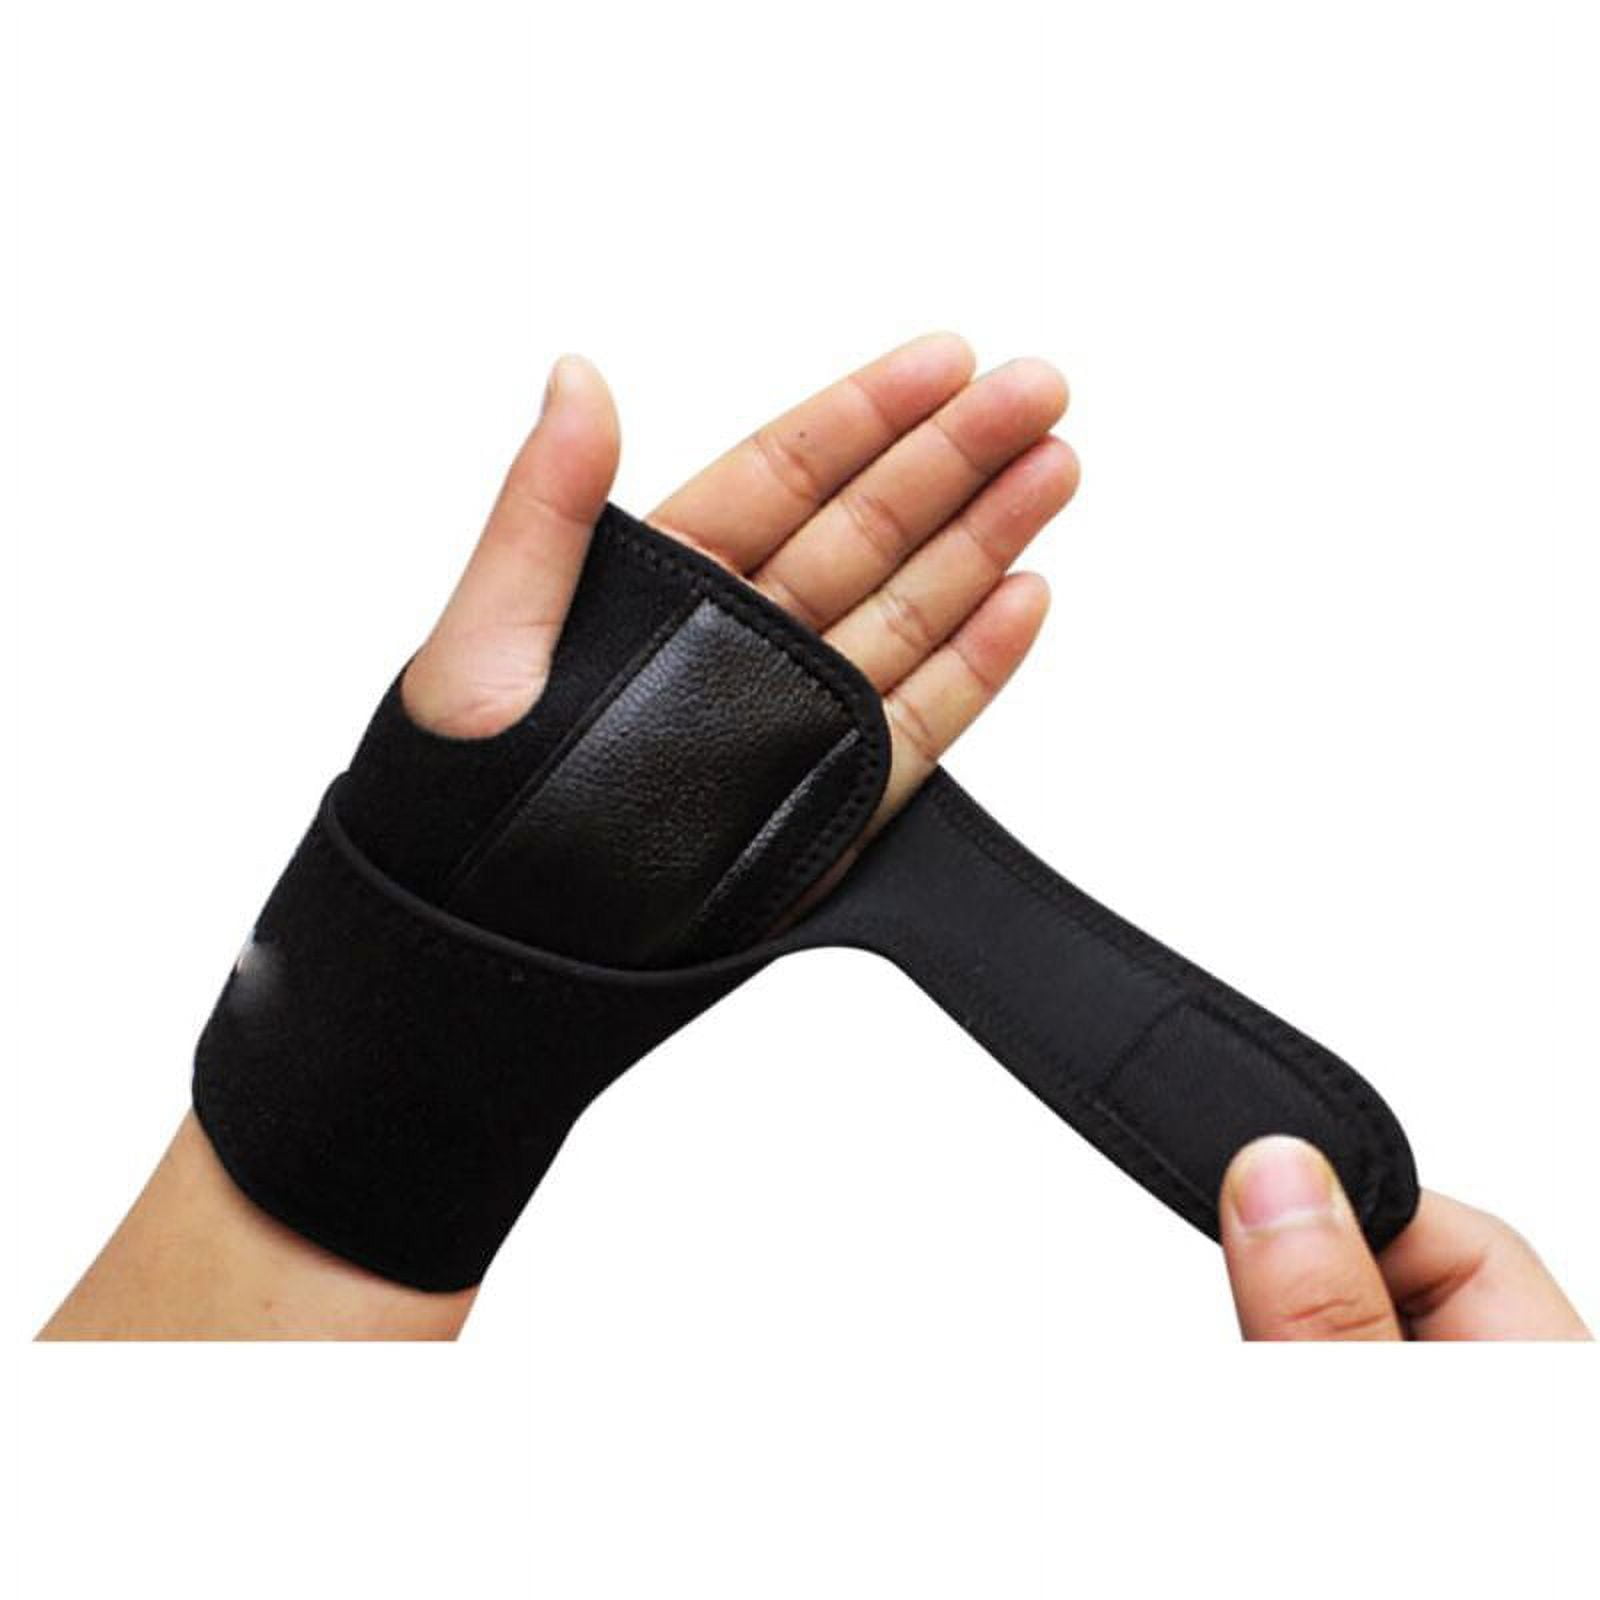 Thumb Spica Splint & Wrist Brace Both A Wrist Splint And Thumb Splint To  Support Sprains, Tendinosis, De Quervain's